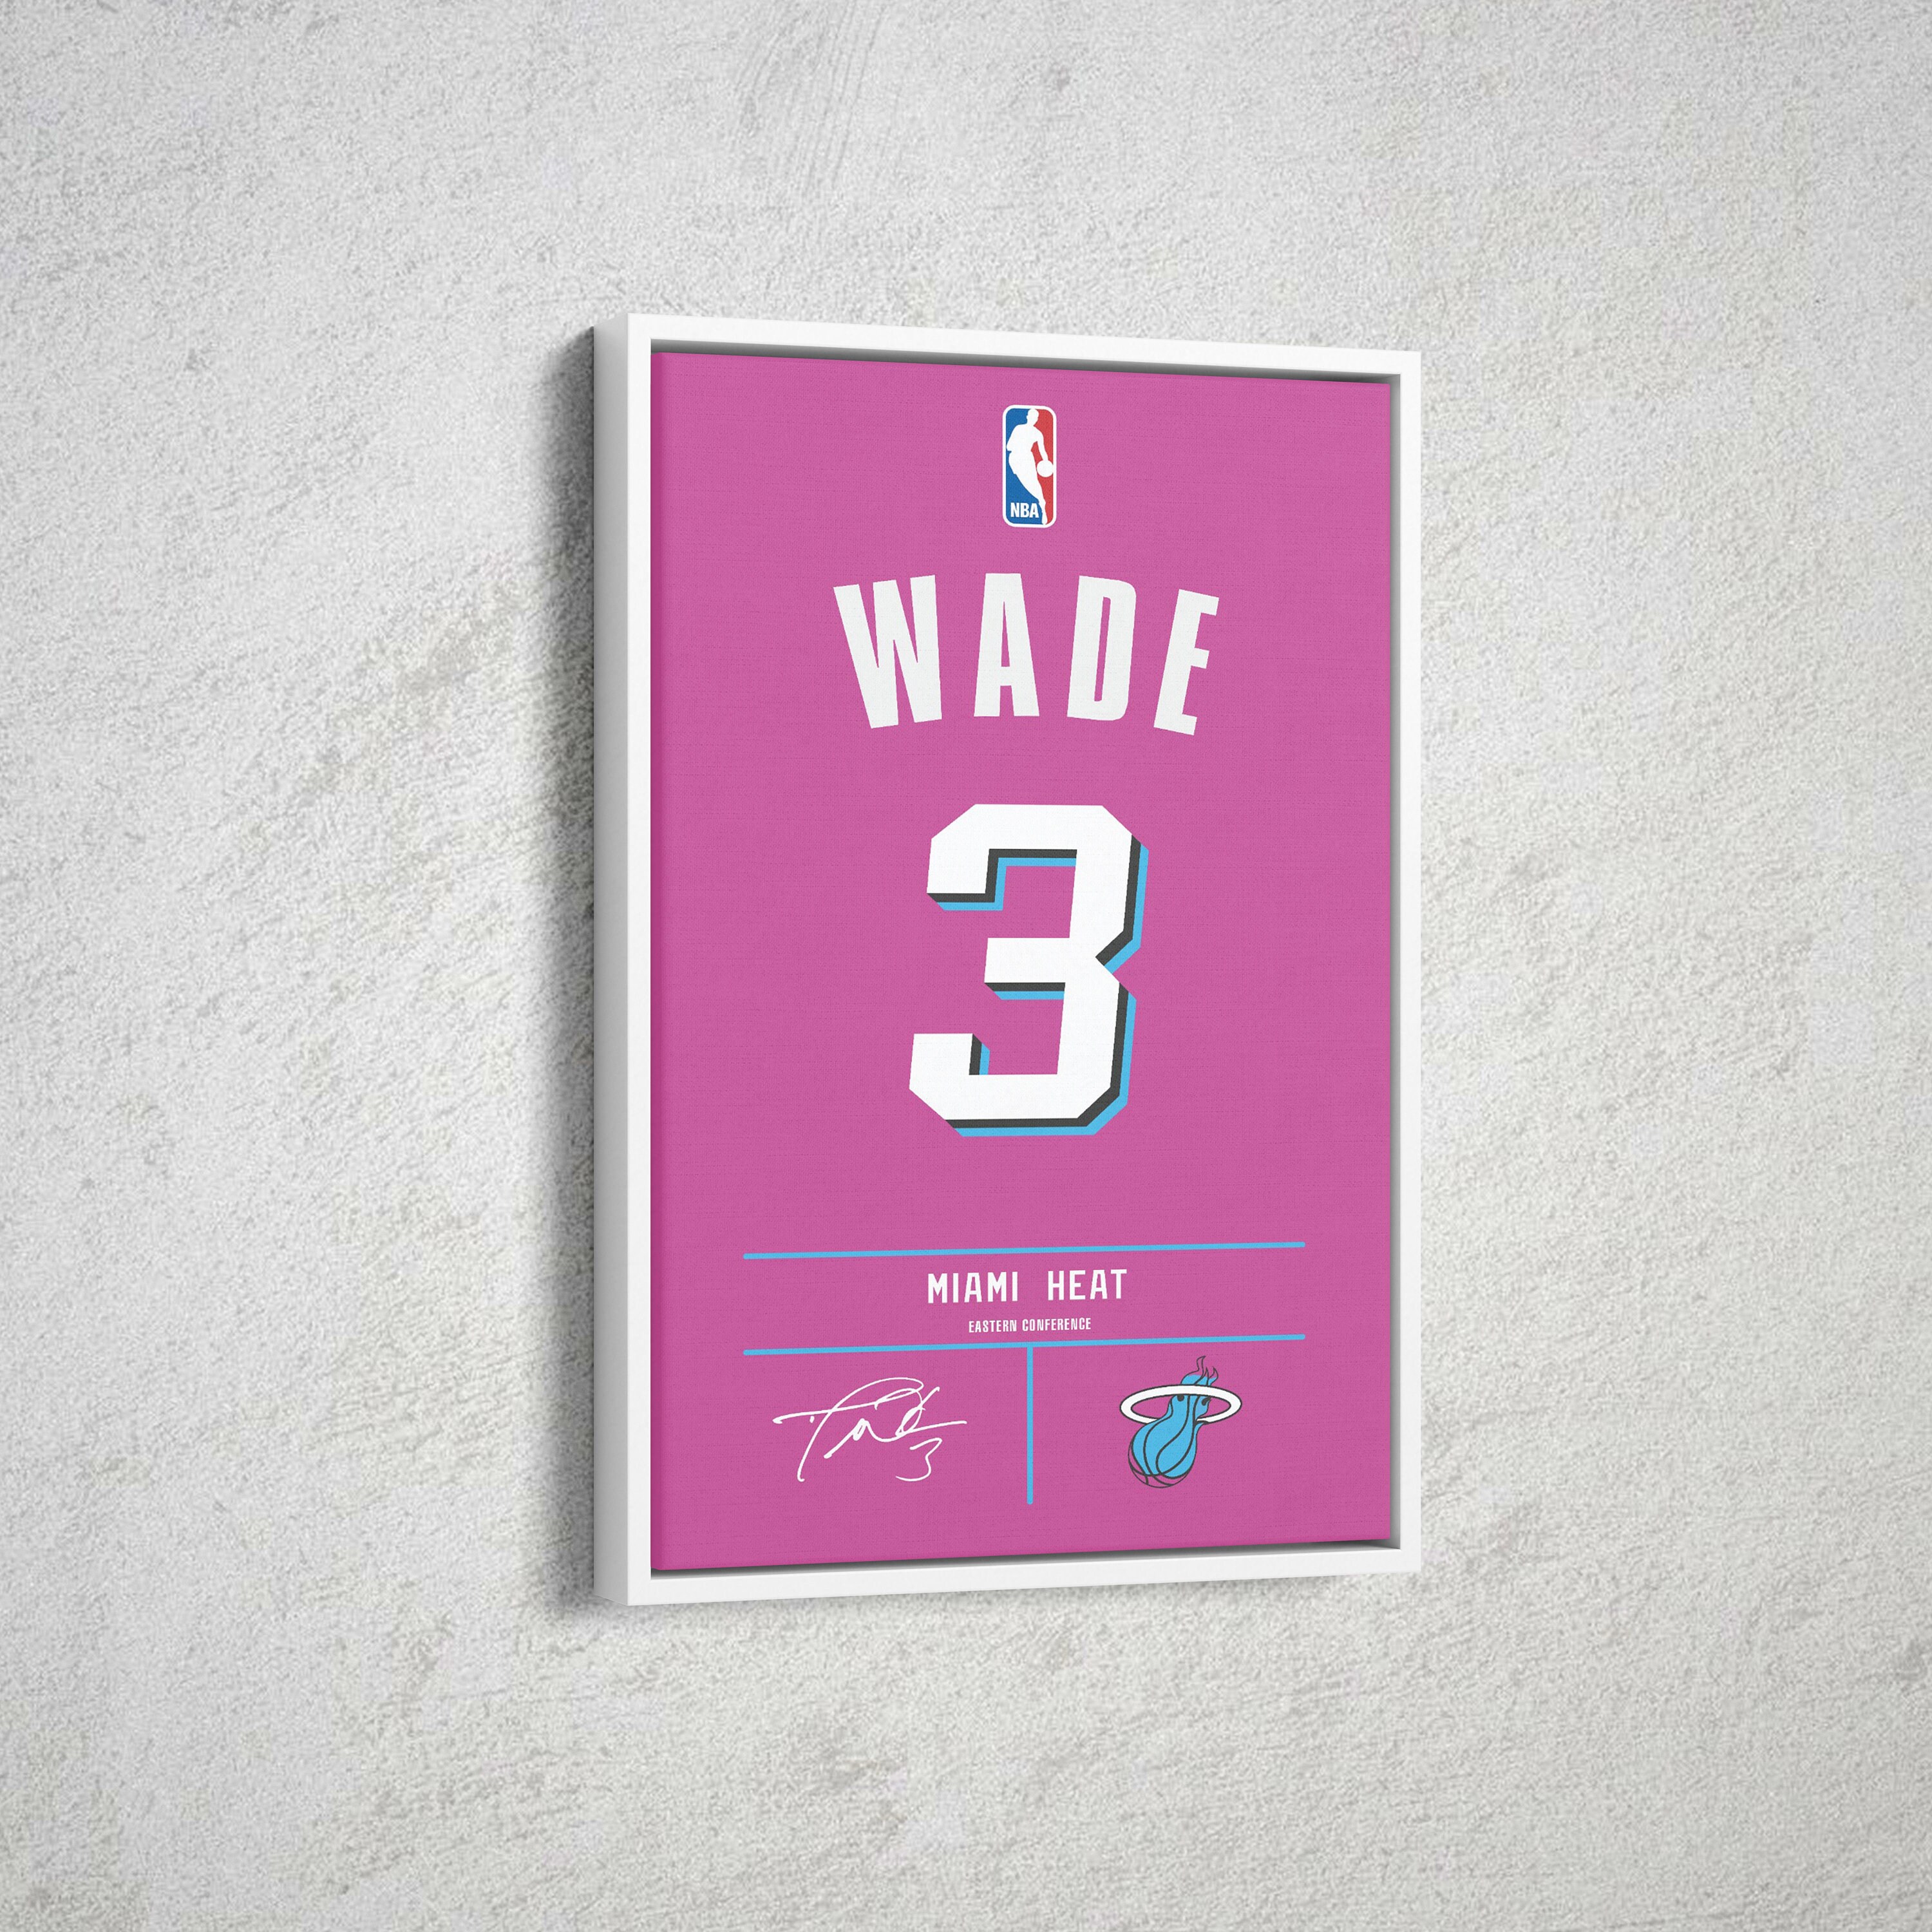 Dwayne Wade Miami Heat NBA Autographed Signed Jersey XL COA Vice Color Pink  Blue